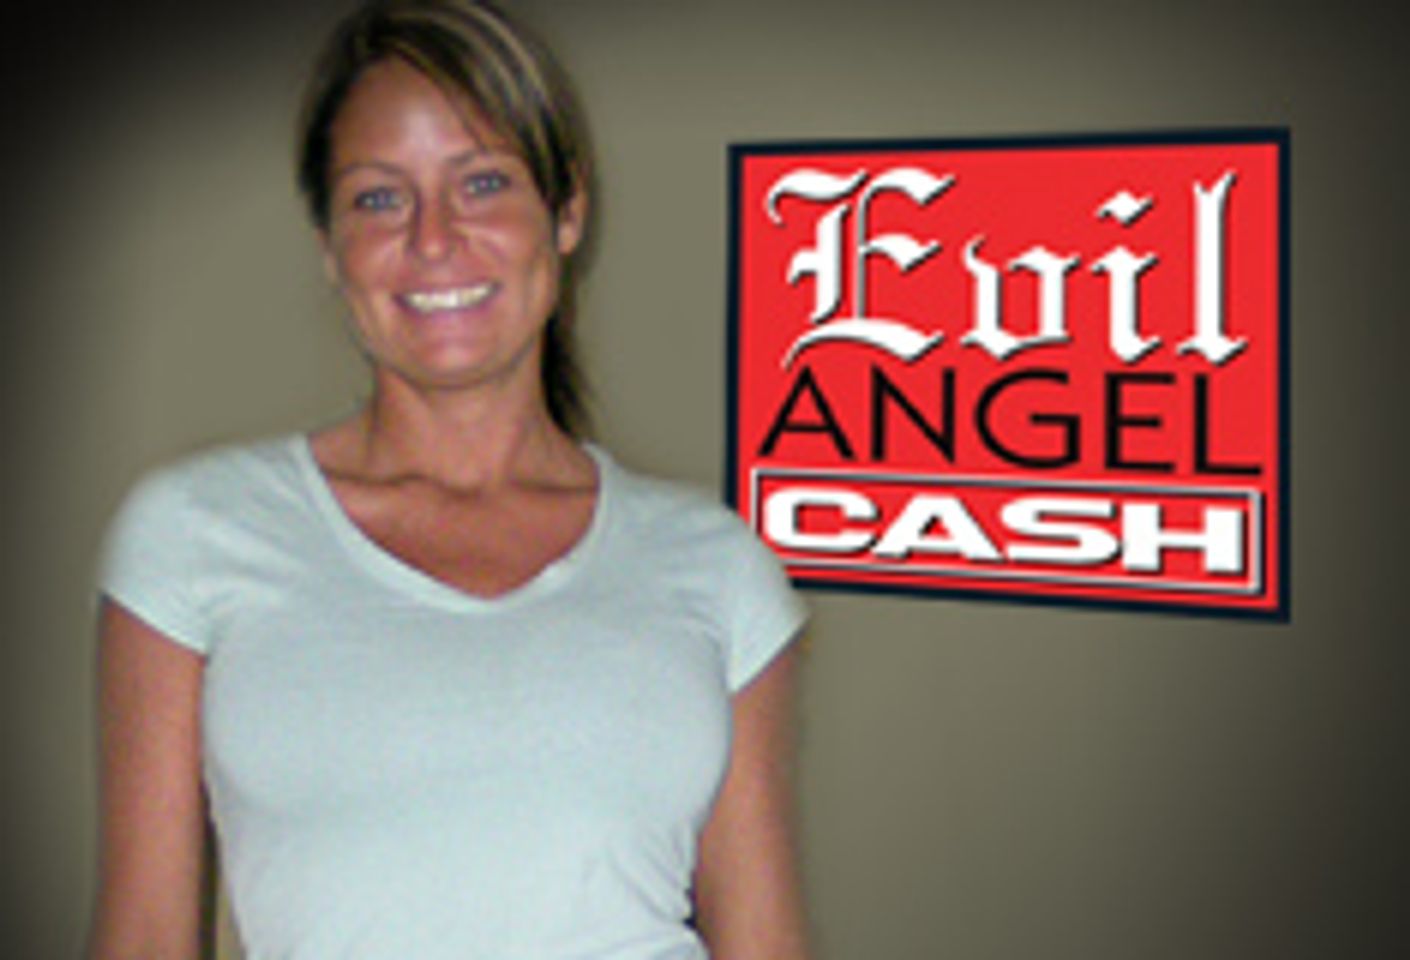 Evil Angel Hires Kristin R. As New Team Member